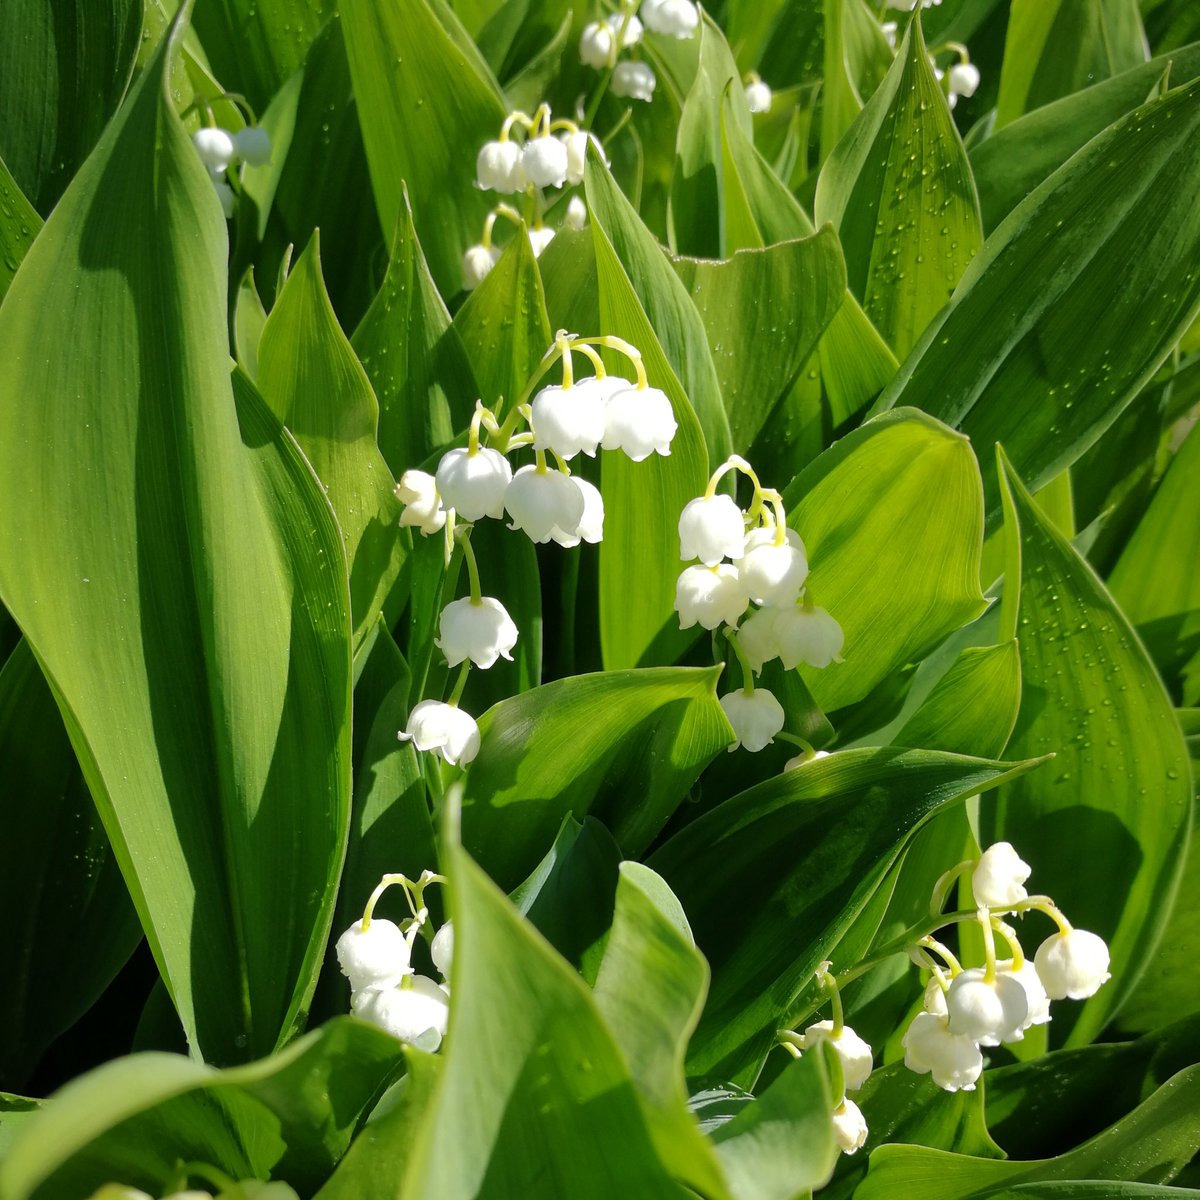 Maiglöckchen
Convallaria majalis
☠️
#butterbaumkiel #kiel #flowers #flowerreport #giftpflanze